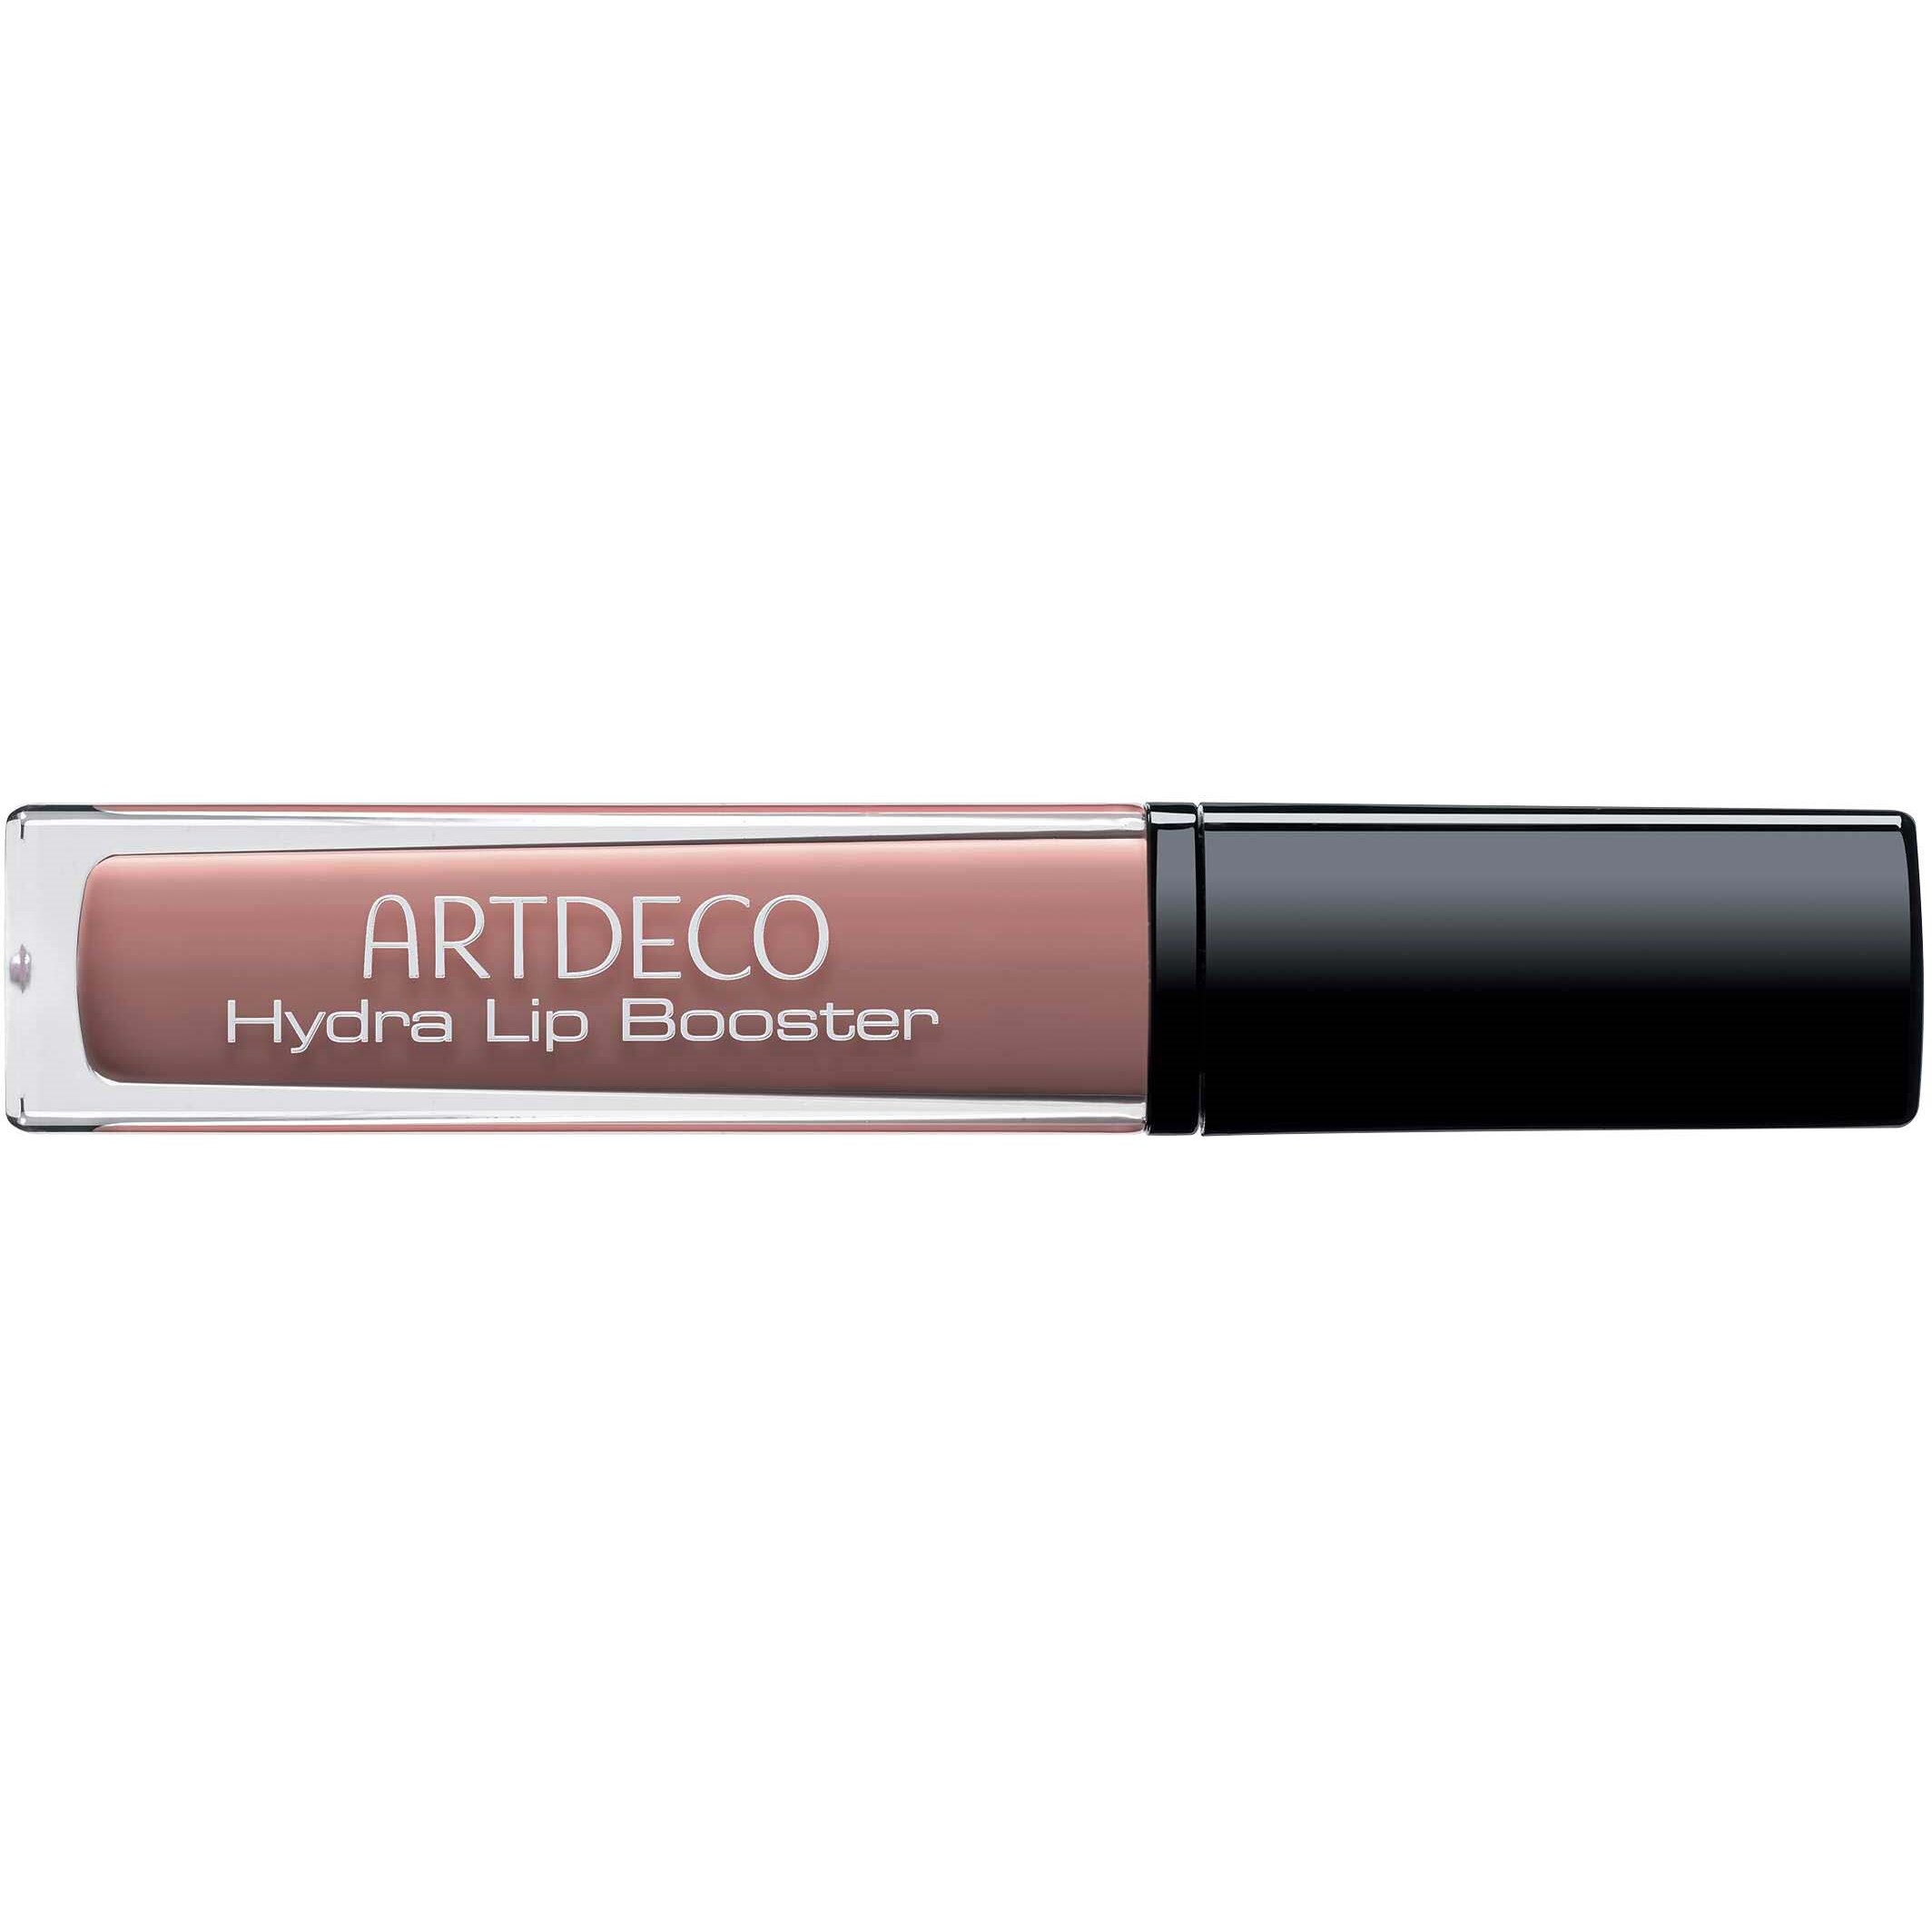 Bilde av Artdeco Hydra Lip Booster 36 Translucent Rosewood